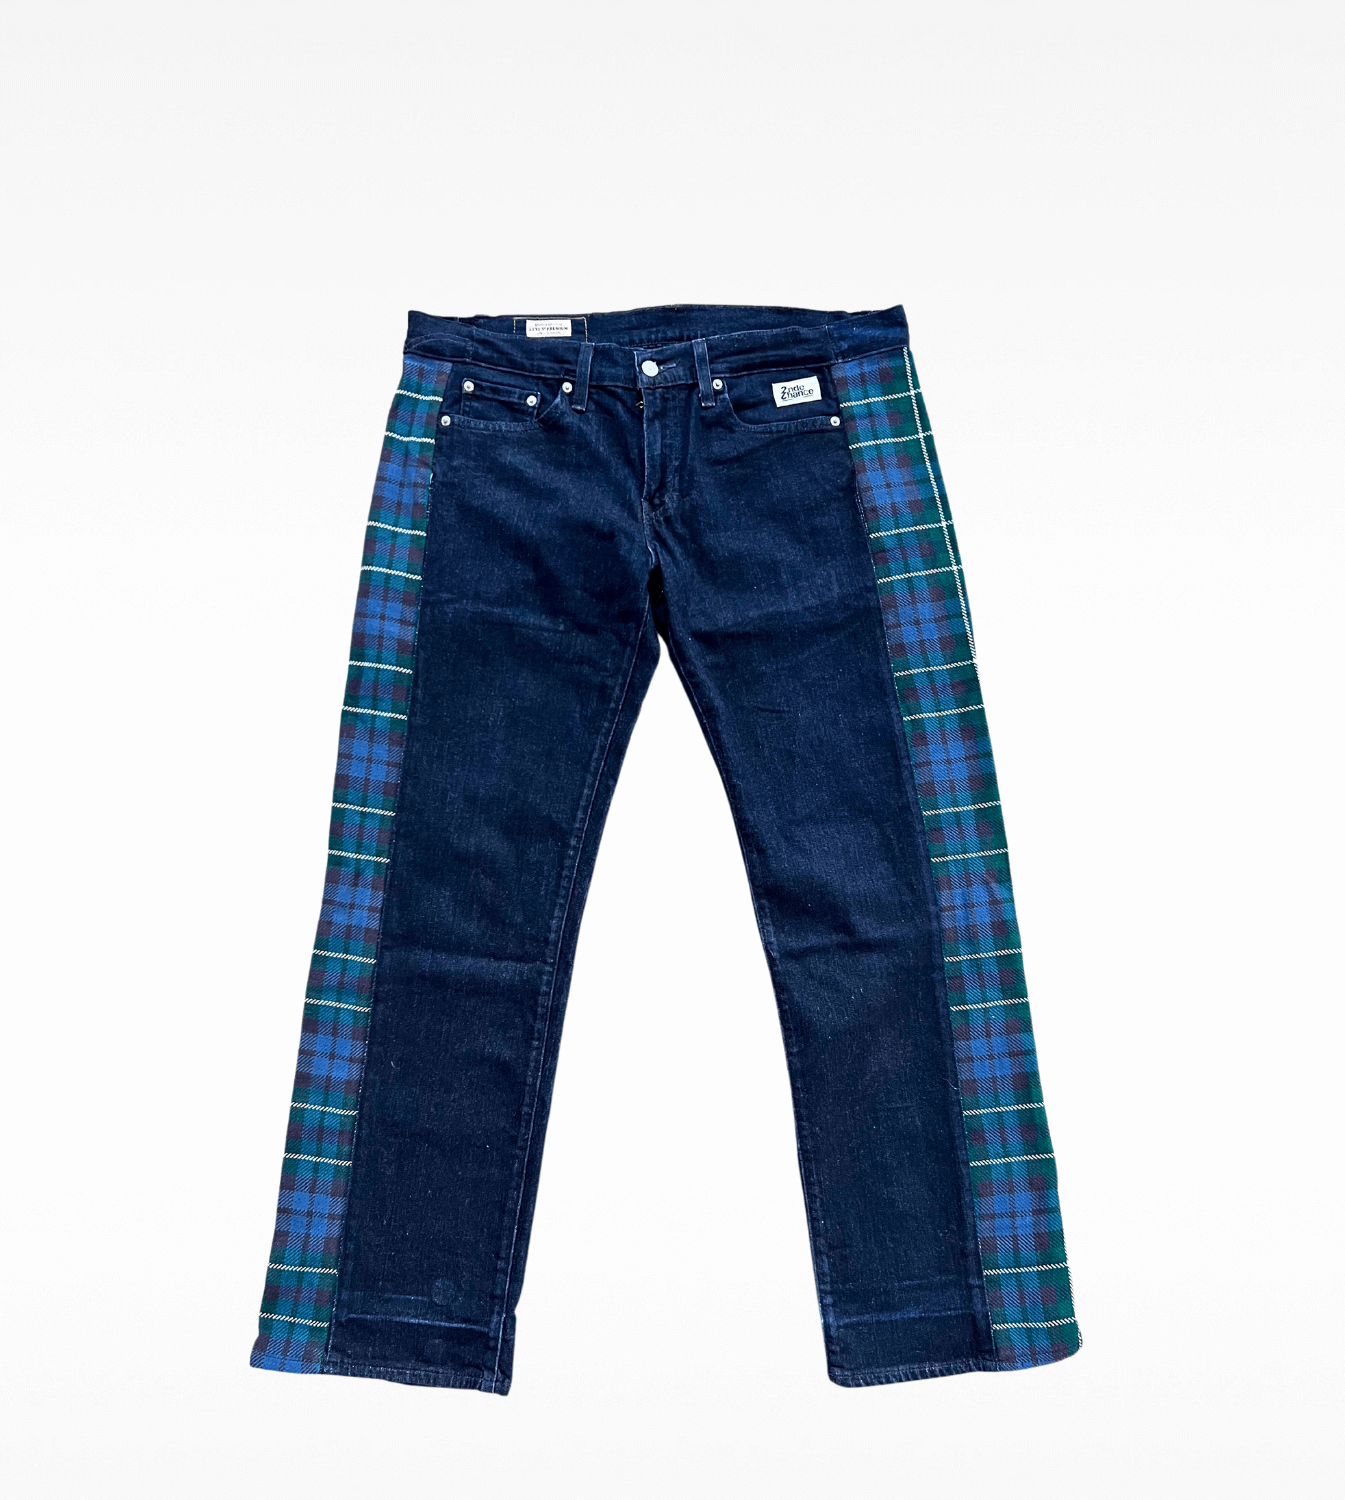 jeans-rework-levis511-2ndechance-madeinfrance-devant